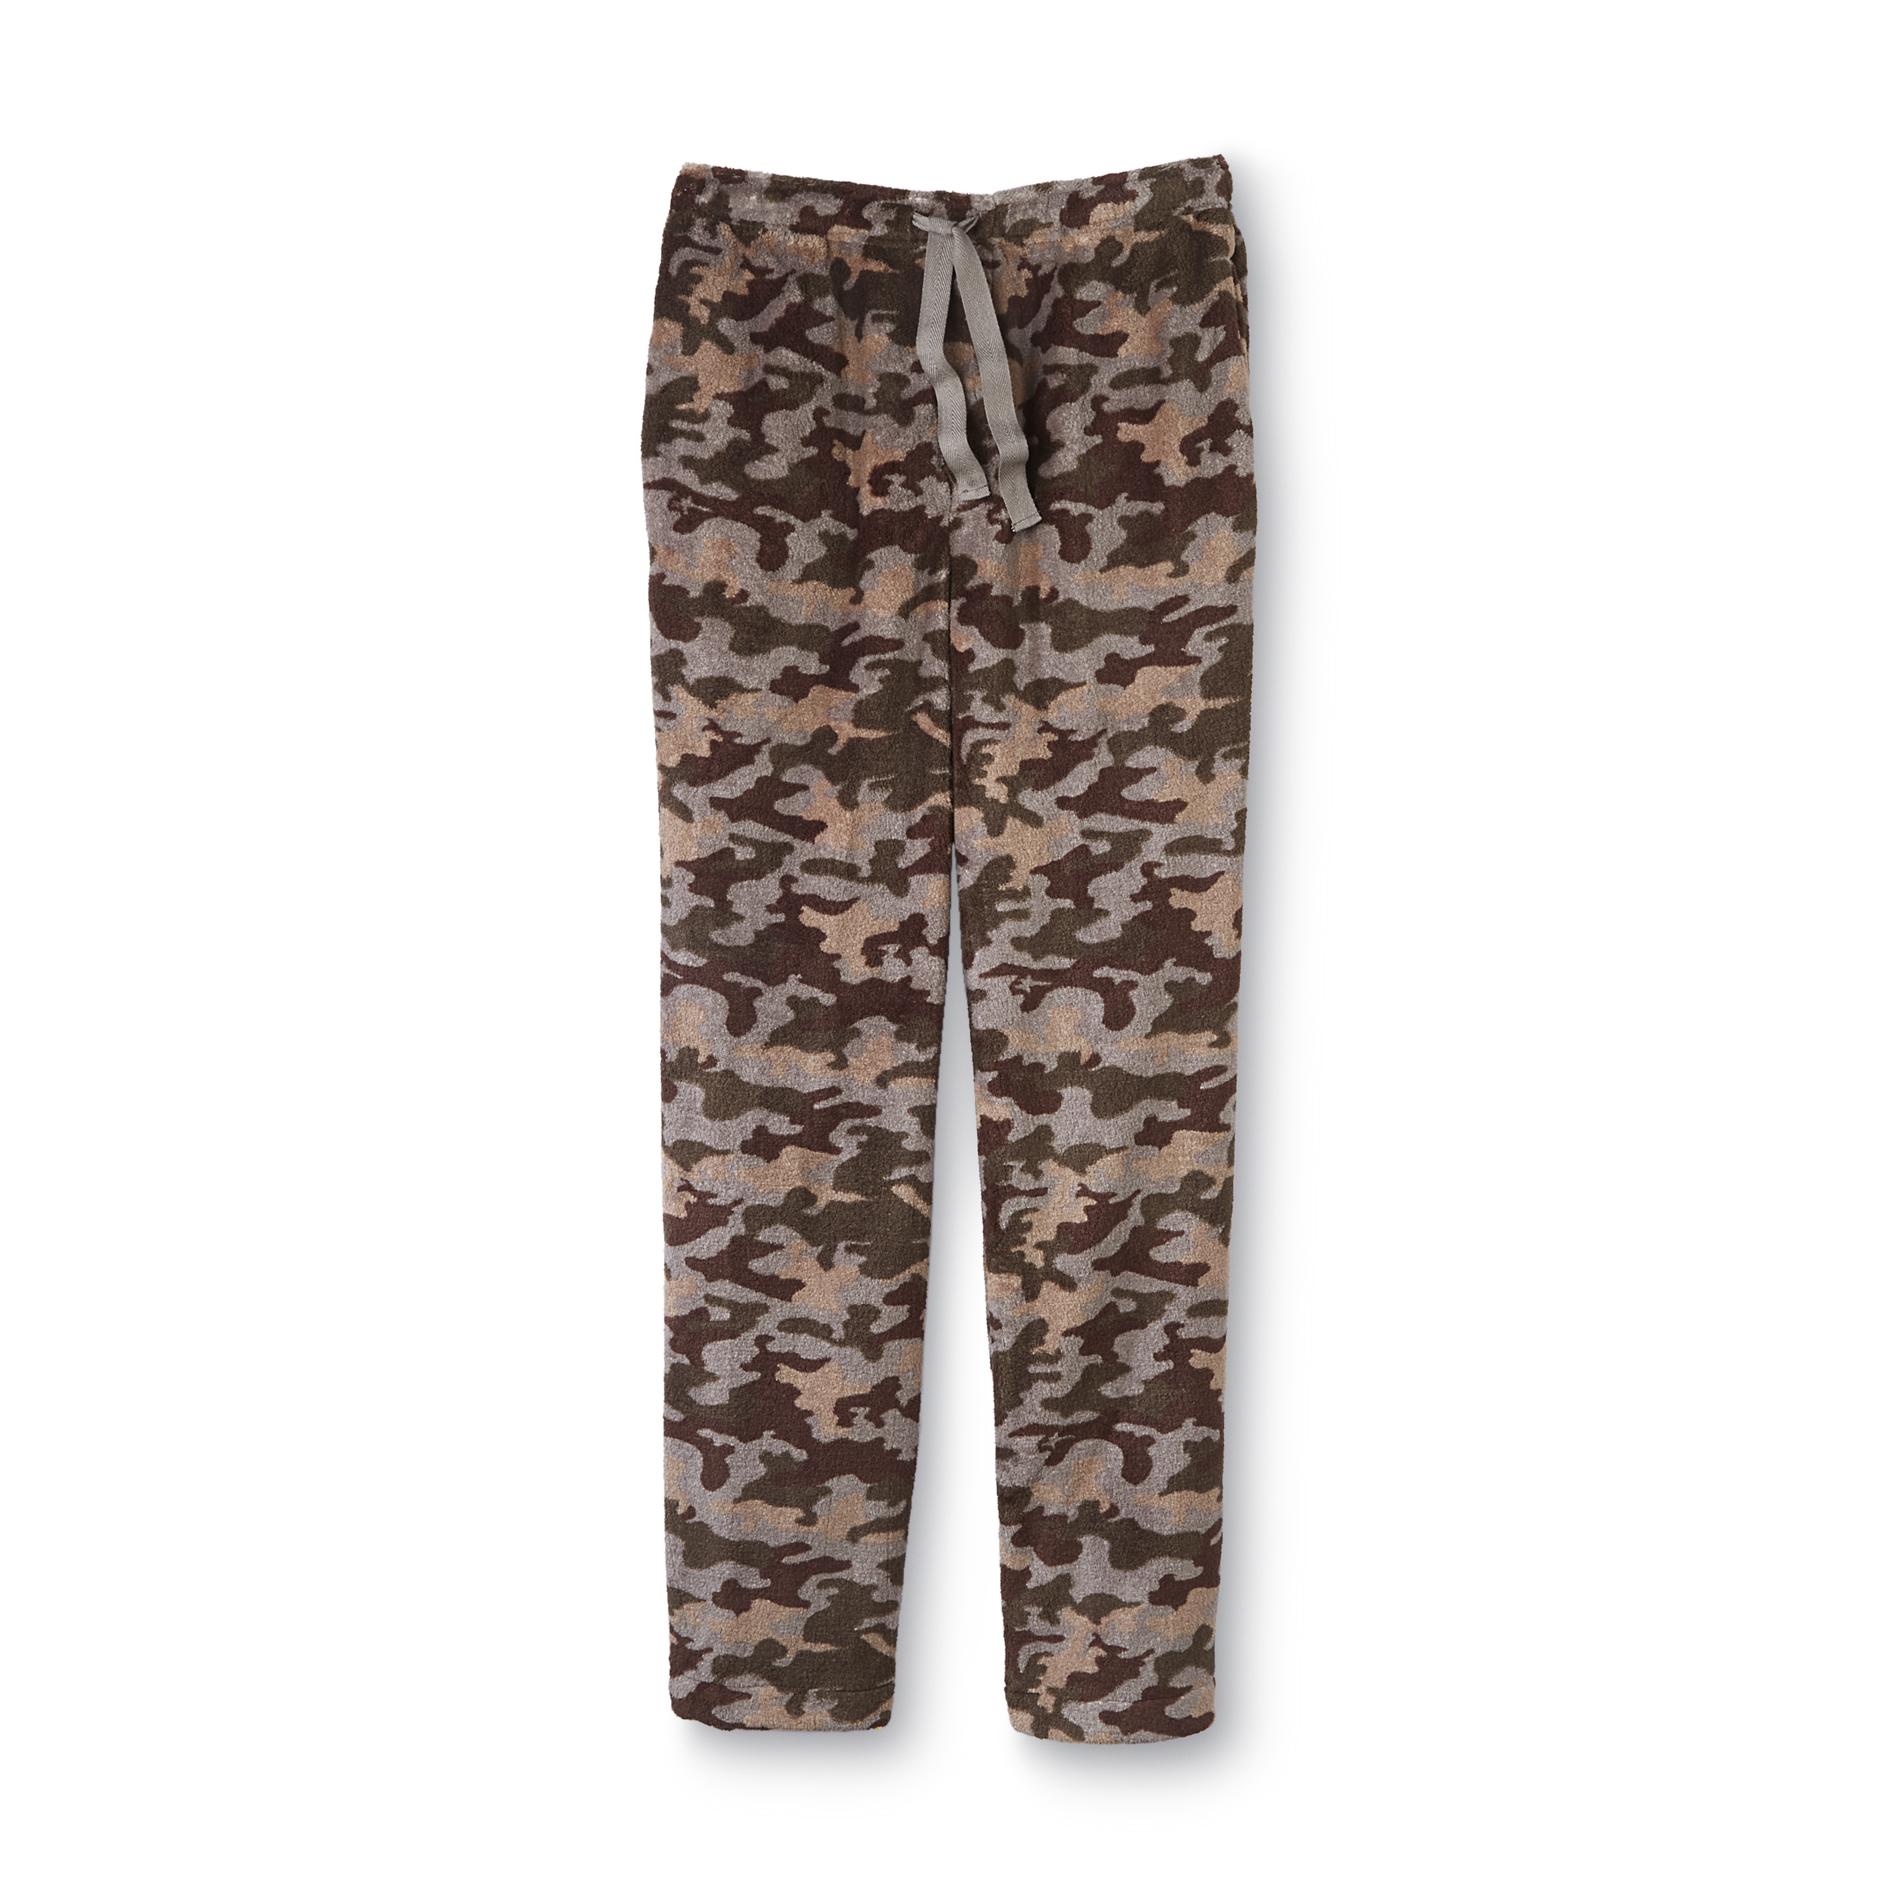 Joe Boxer Men's Plush Pajama Pants - Camouflage